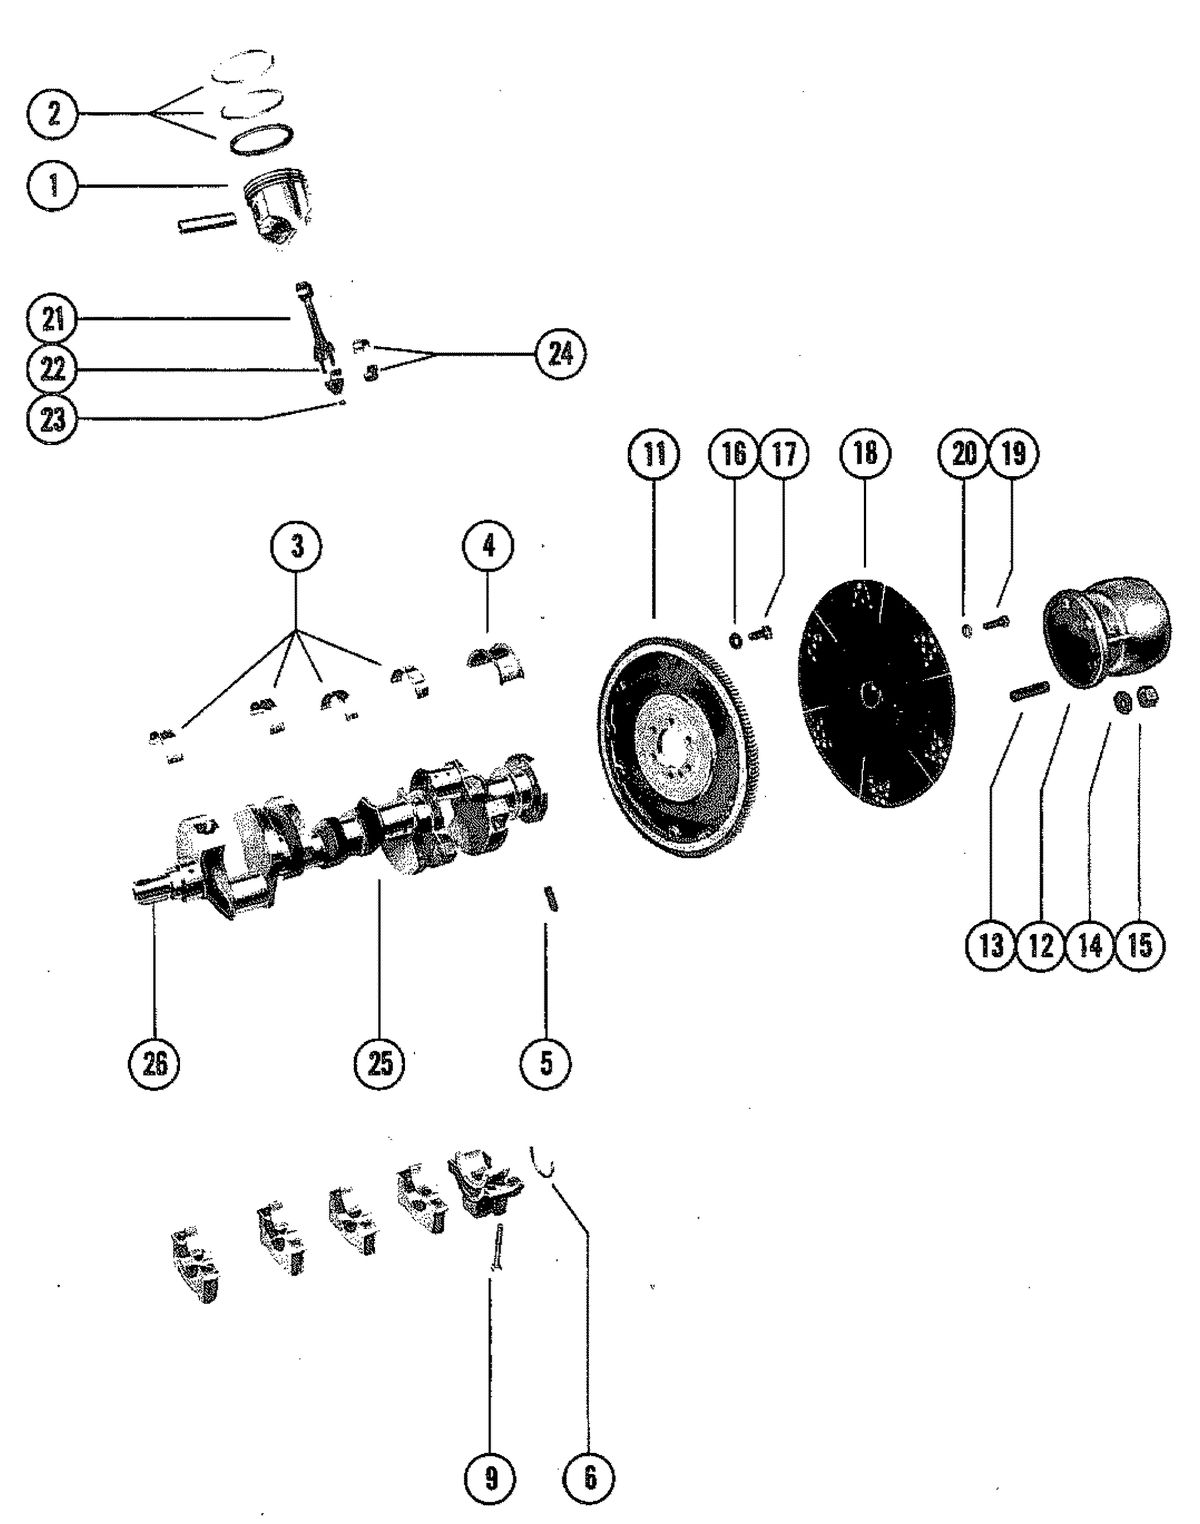 MERCRUISER 898 (STERN DRIVE) 198 (INBOARD) ENGINE CRANKSHAFT AND PISTONS